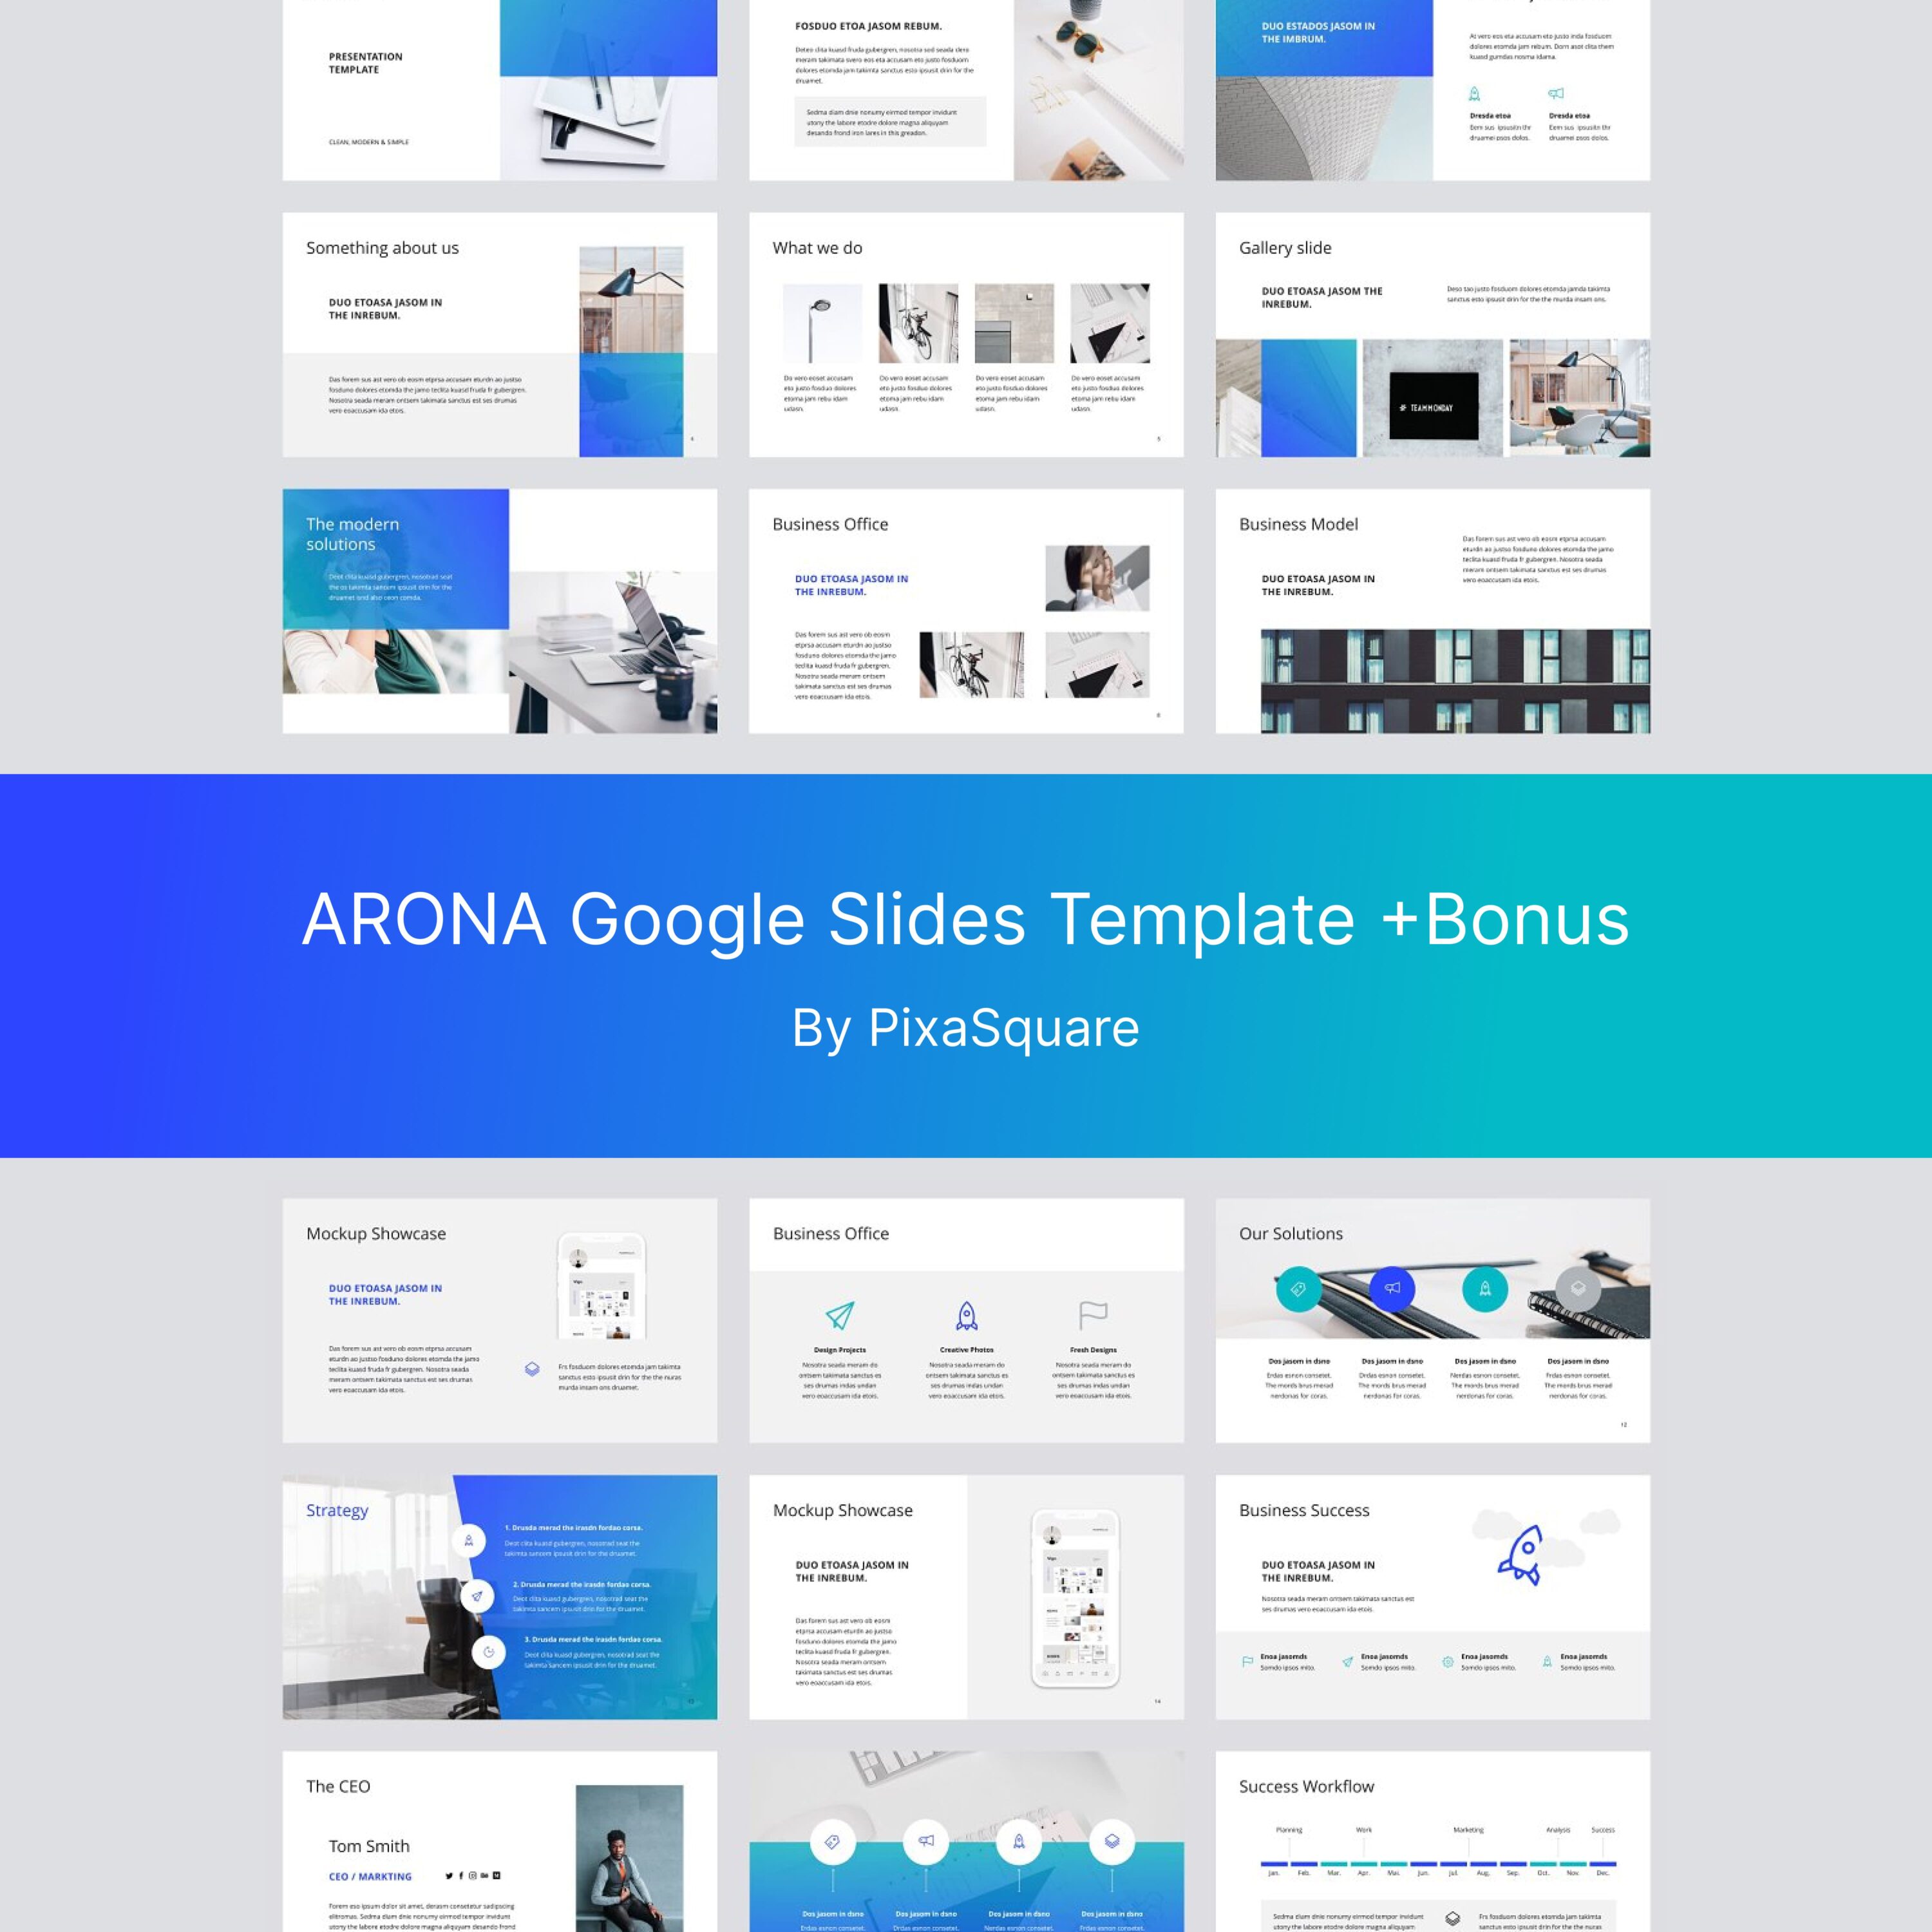 ARONA Google Slides Template +Bonus cover.